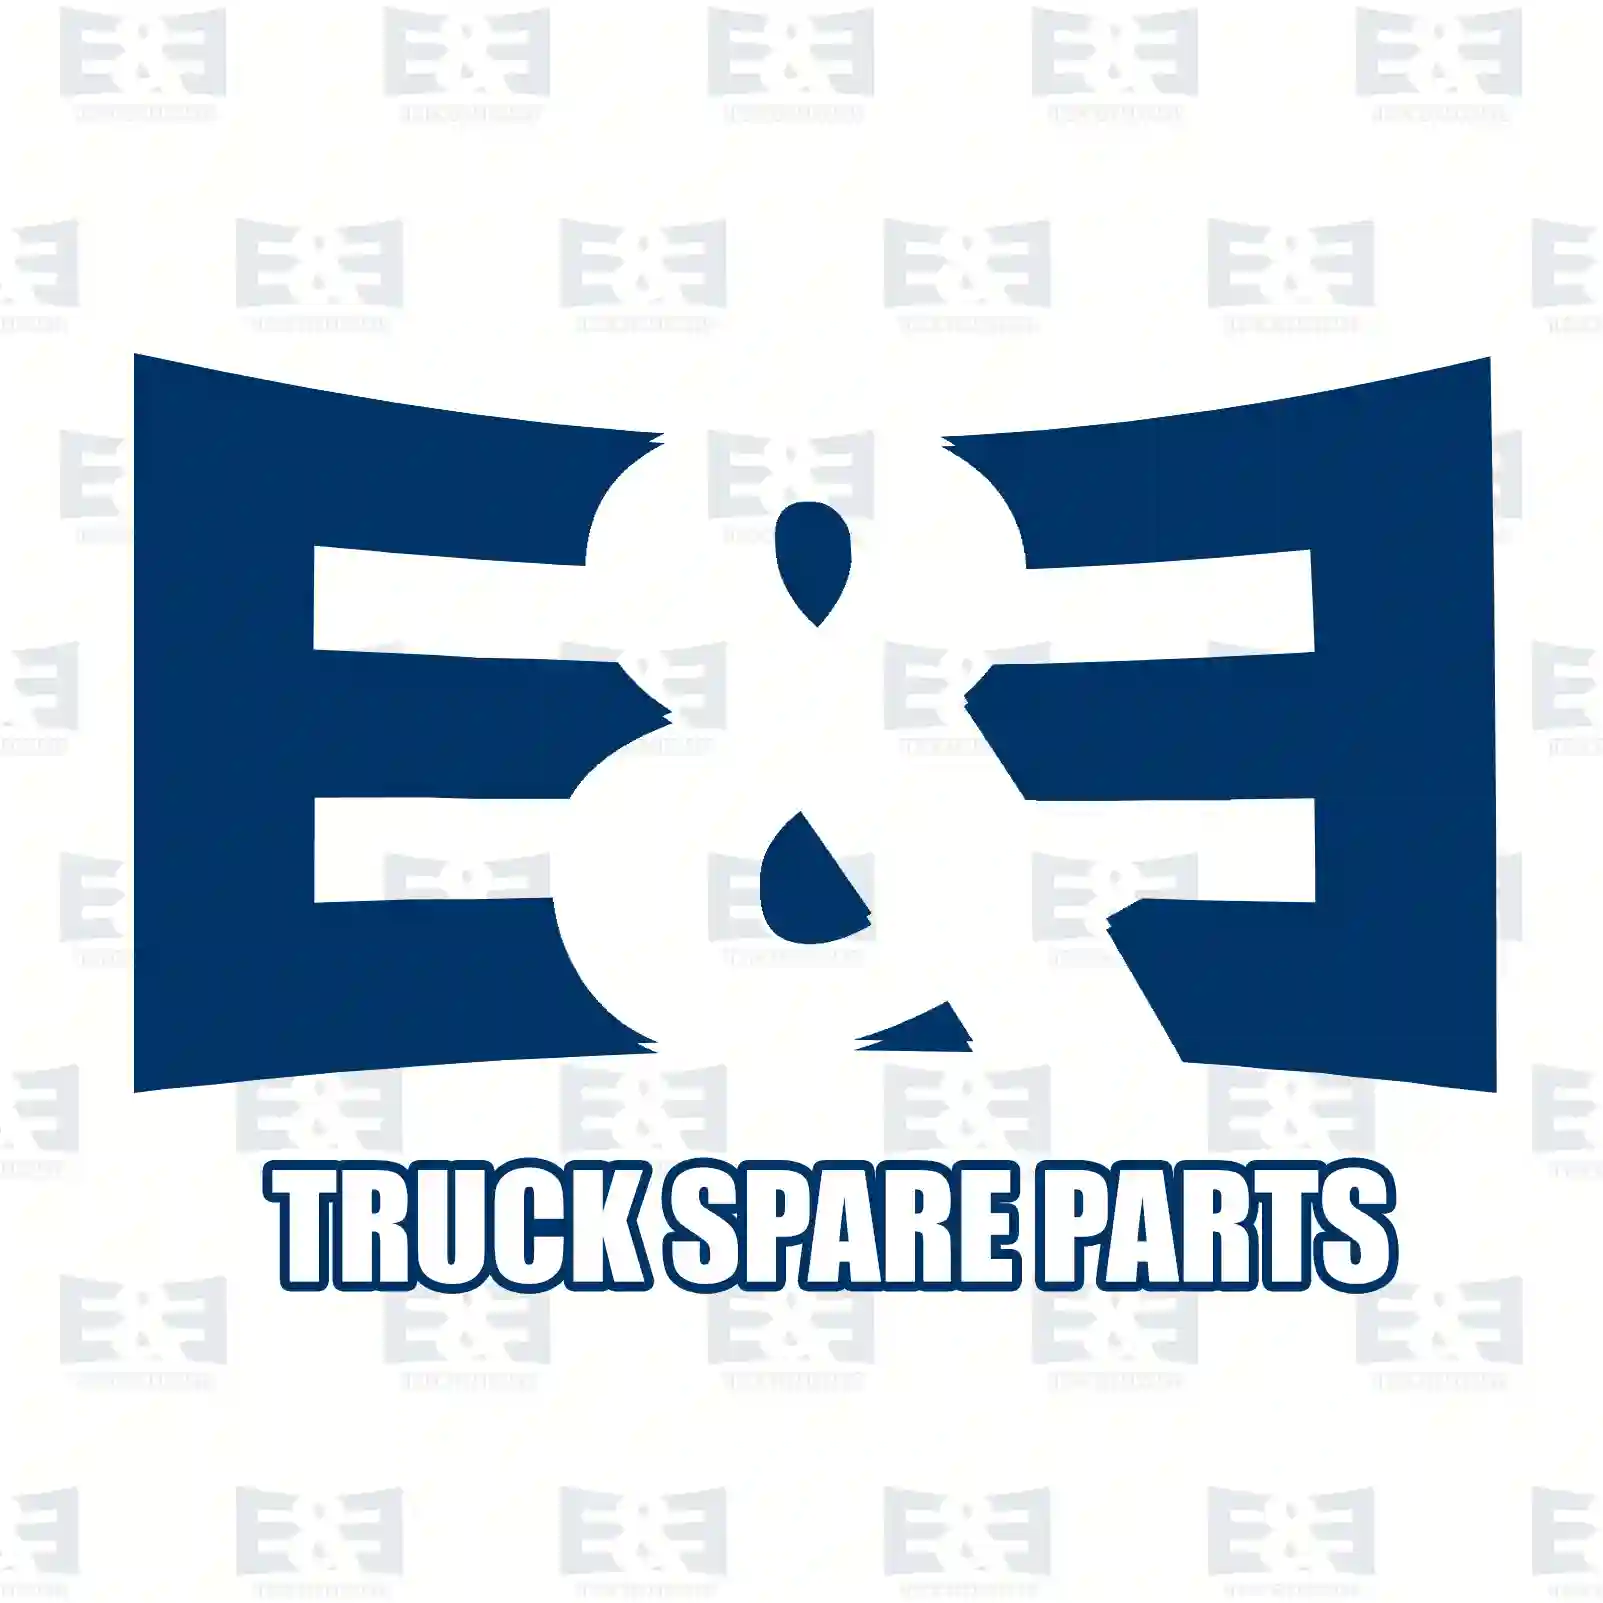 Spring bushing, 2E2282325, 5000448405, 20498774, ZG41738-0008 ||  2E2282325 E&E Truck Spare Parts | Truck Spare Parts, Auotomotive Spare Parts Spring bushing, 2E2282325, 5000448405, 20498774, ZG41738-0008 ||  2E2282325 E&E Truck Spare Parts | Truck Spare Parts, Auotomotive Spare Parts